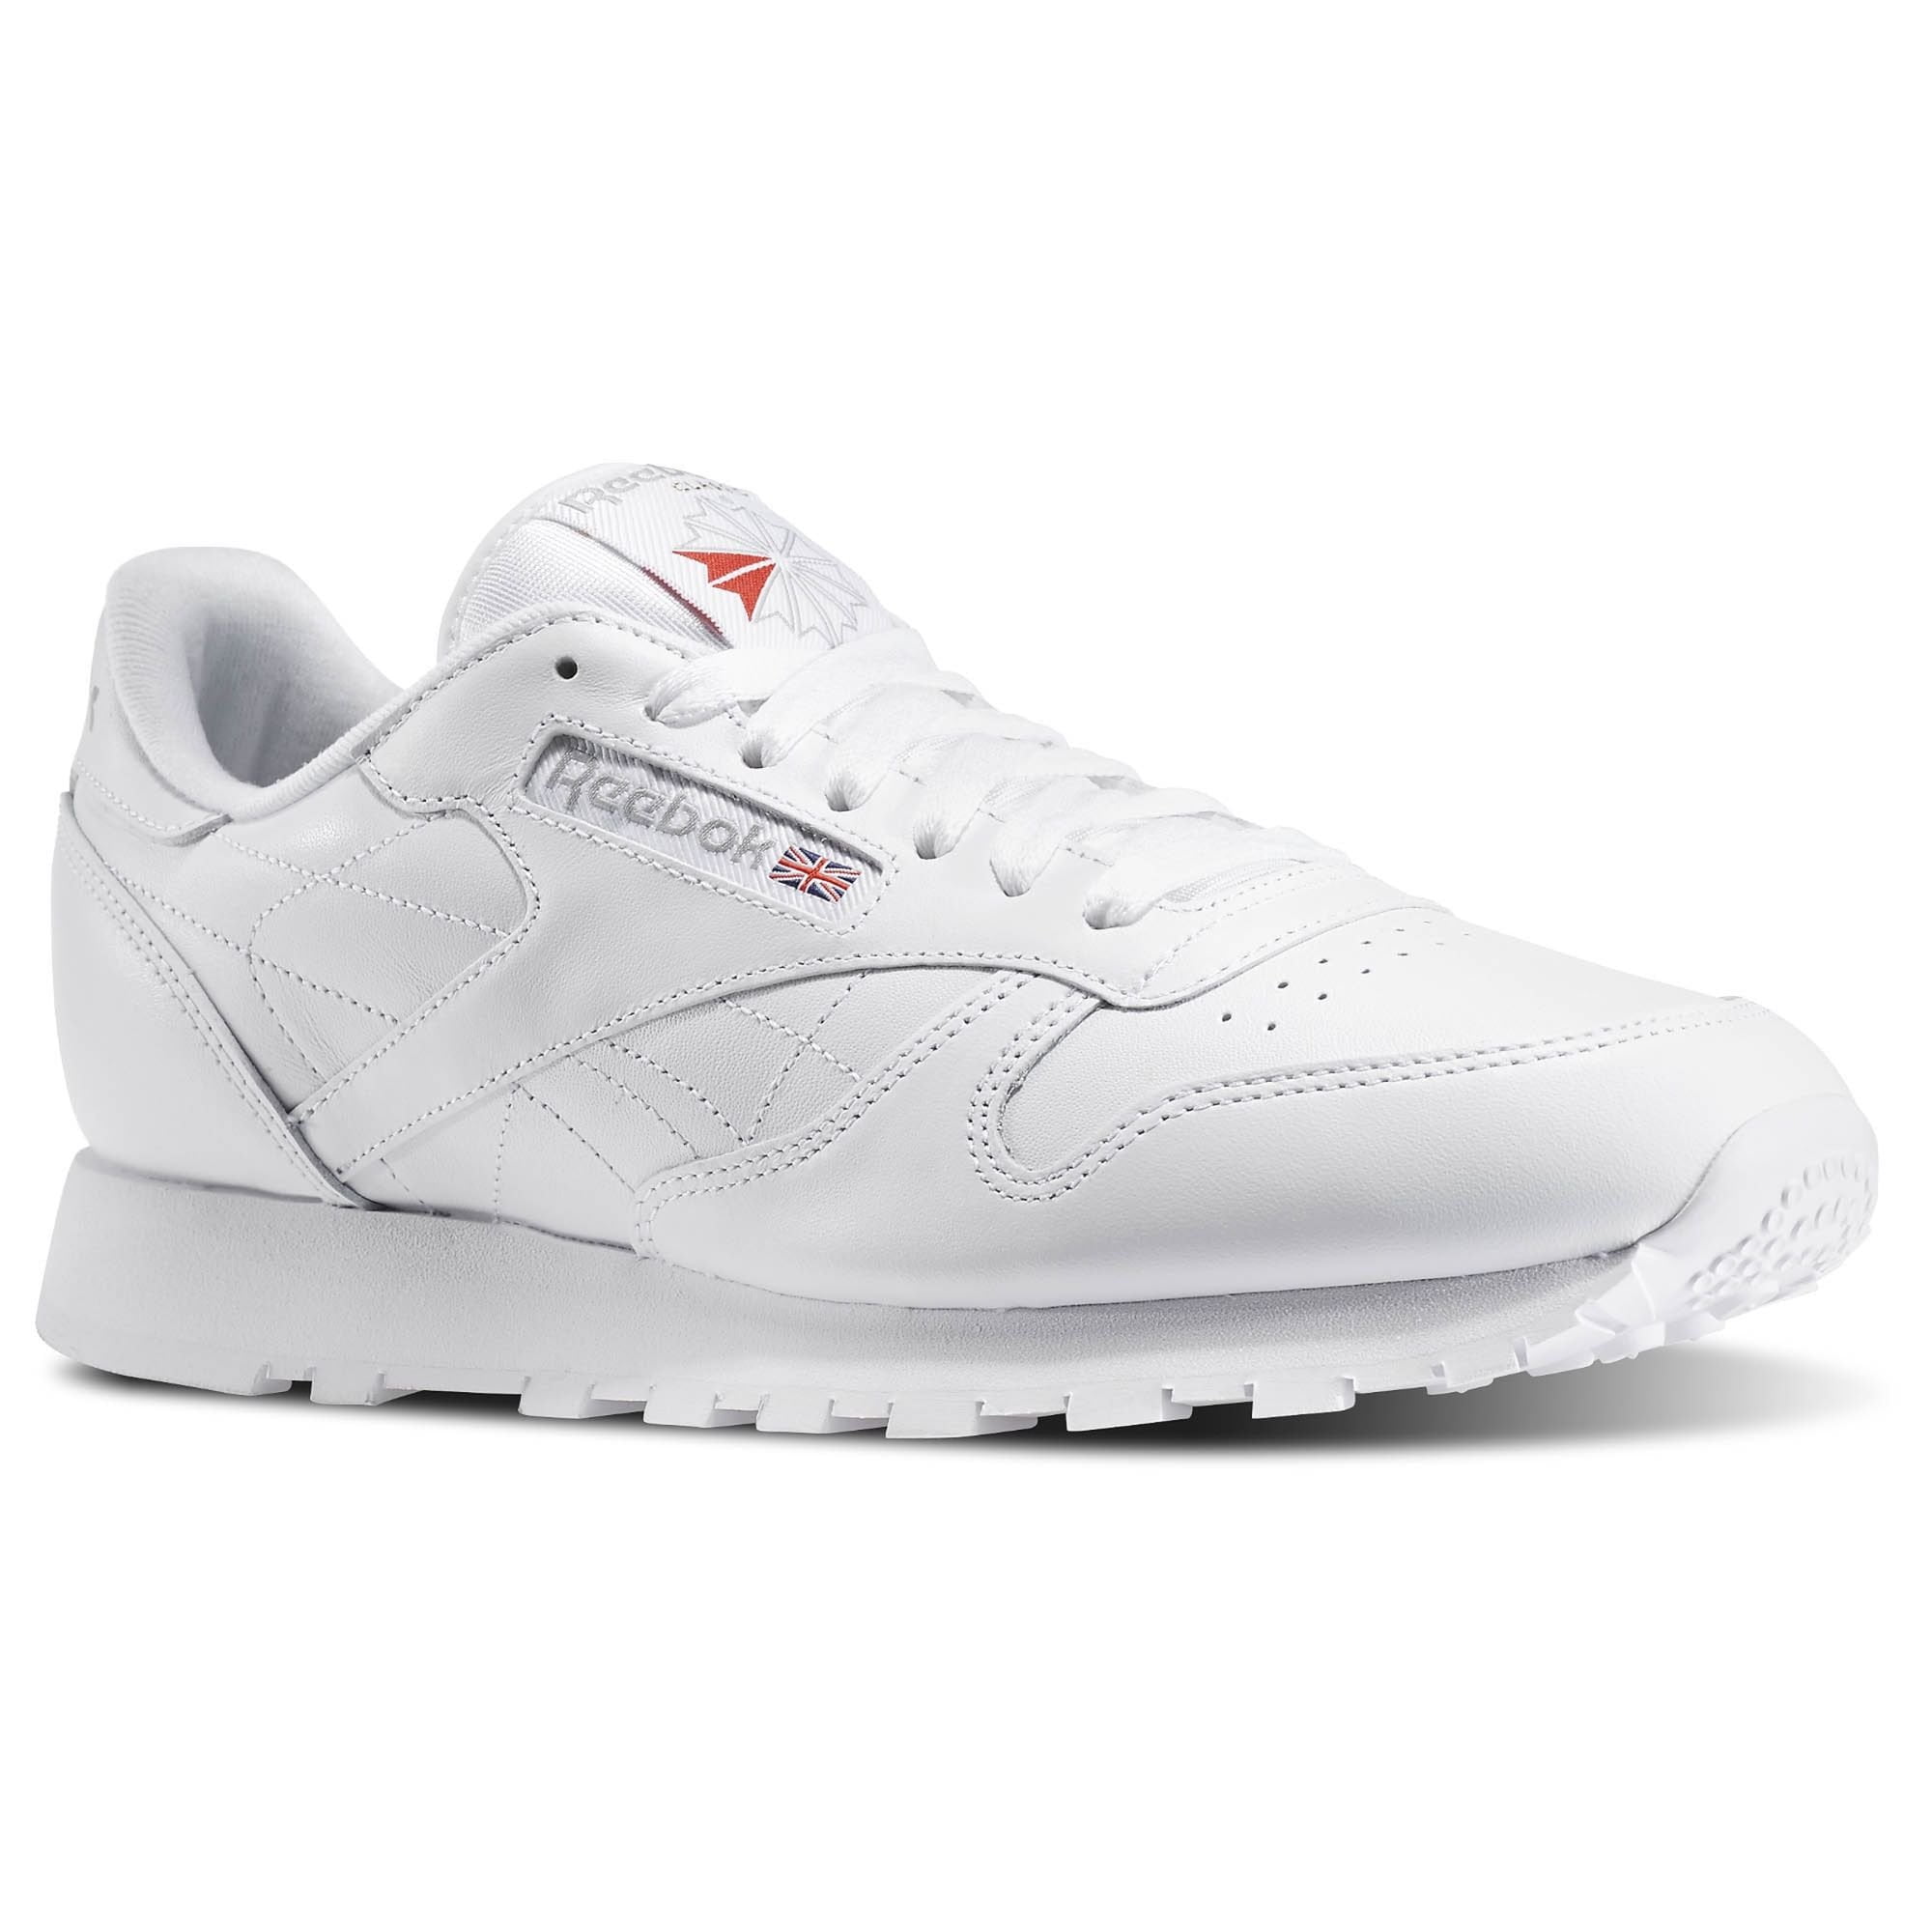 Reebok 9771: Men's Classic Leather Fashion White/Light Grey Sneaker (14  D(M) US Men)